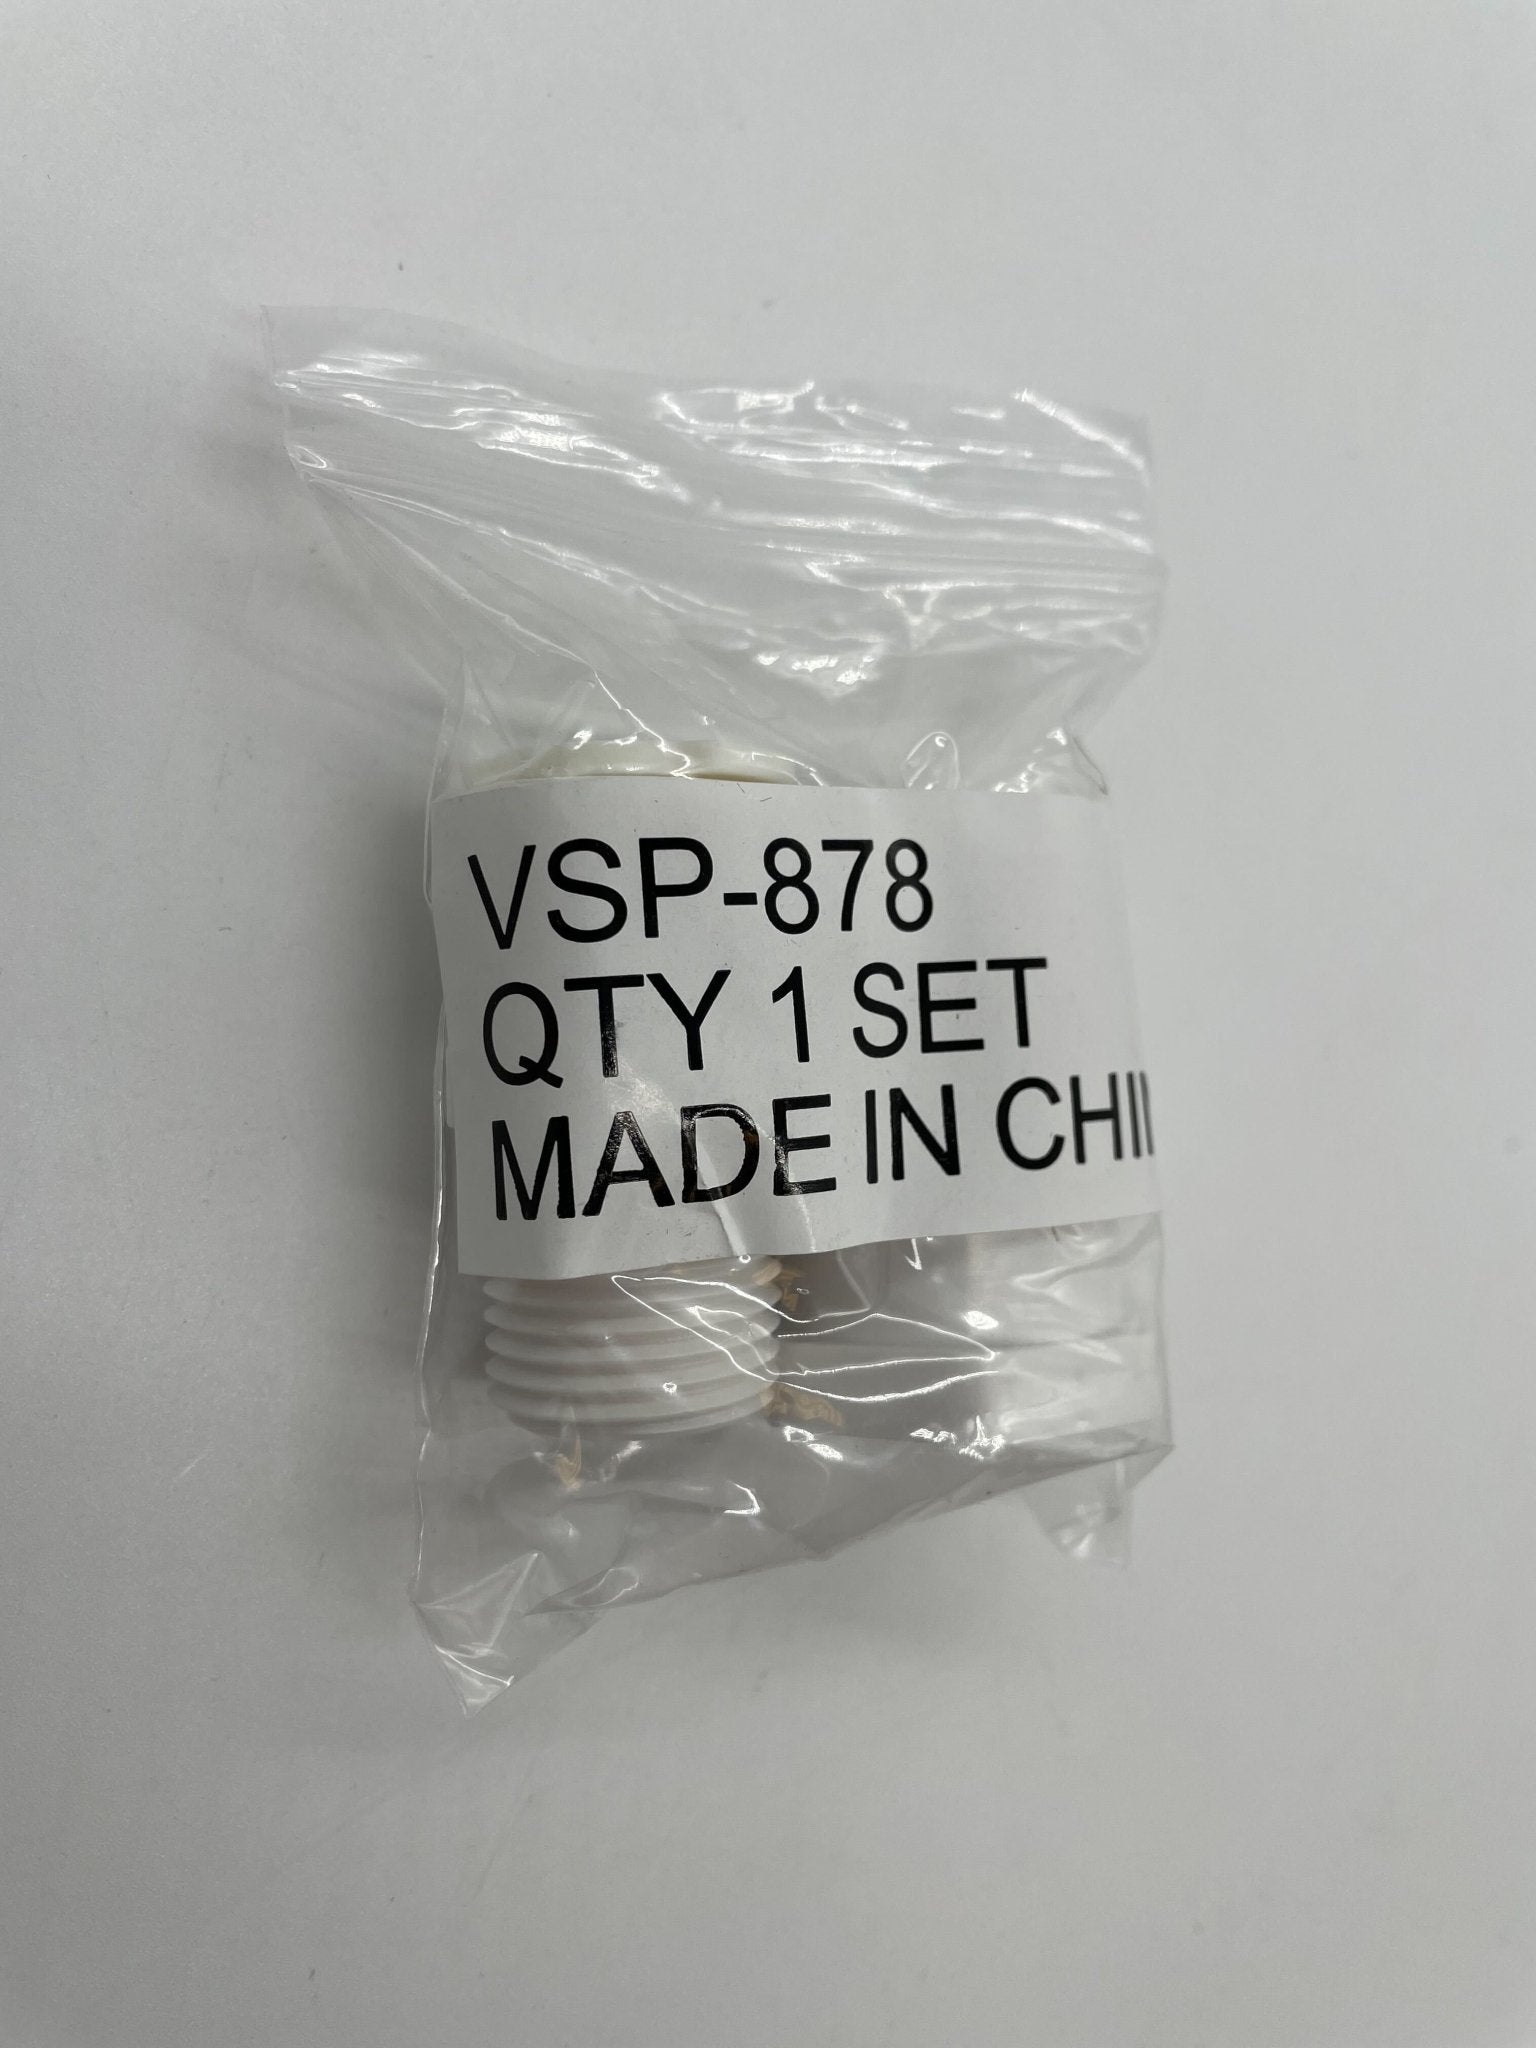 Vesda VSP-878 - The Fire Alarm Supplier